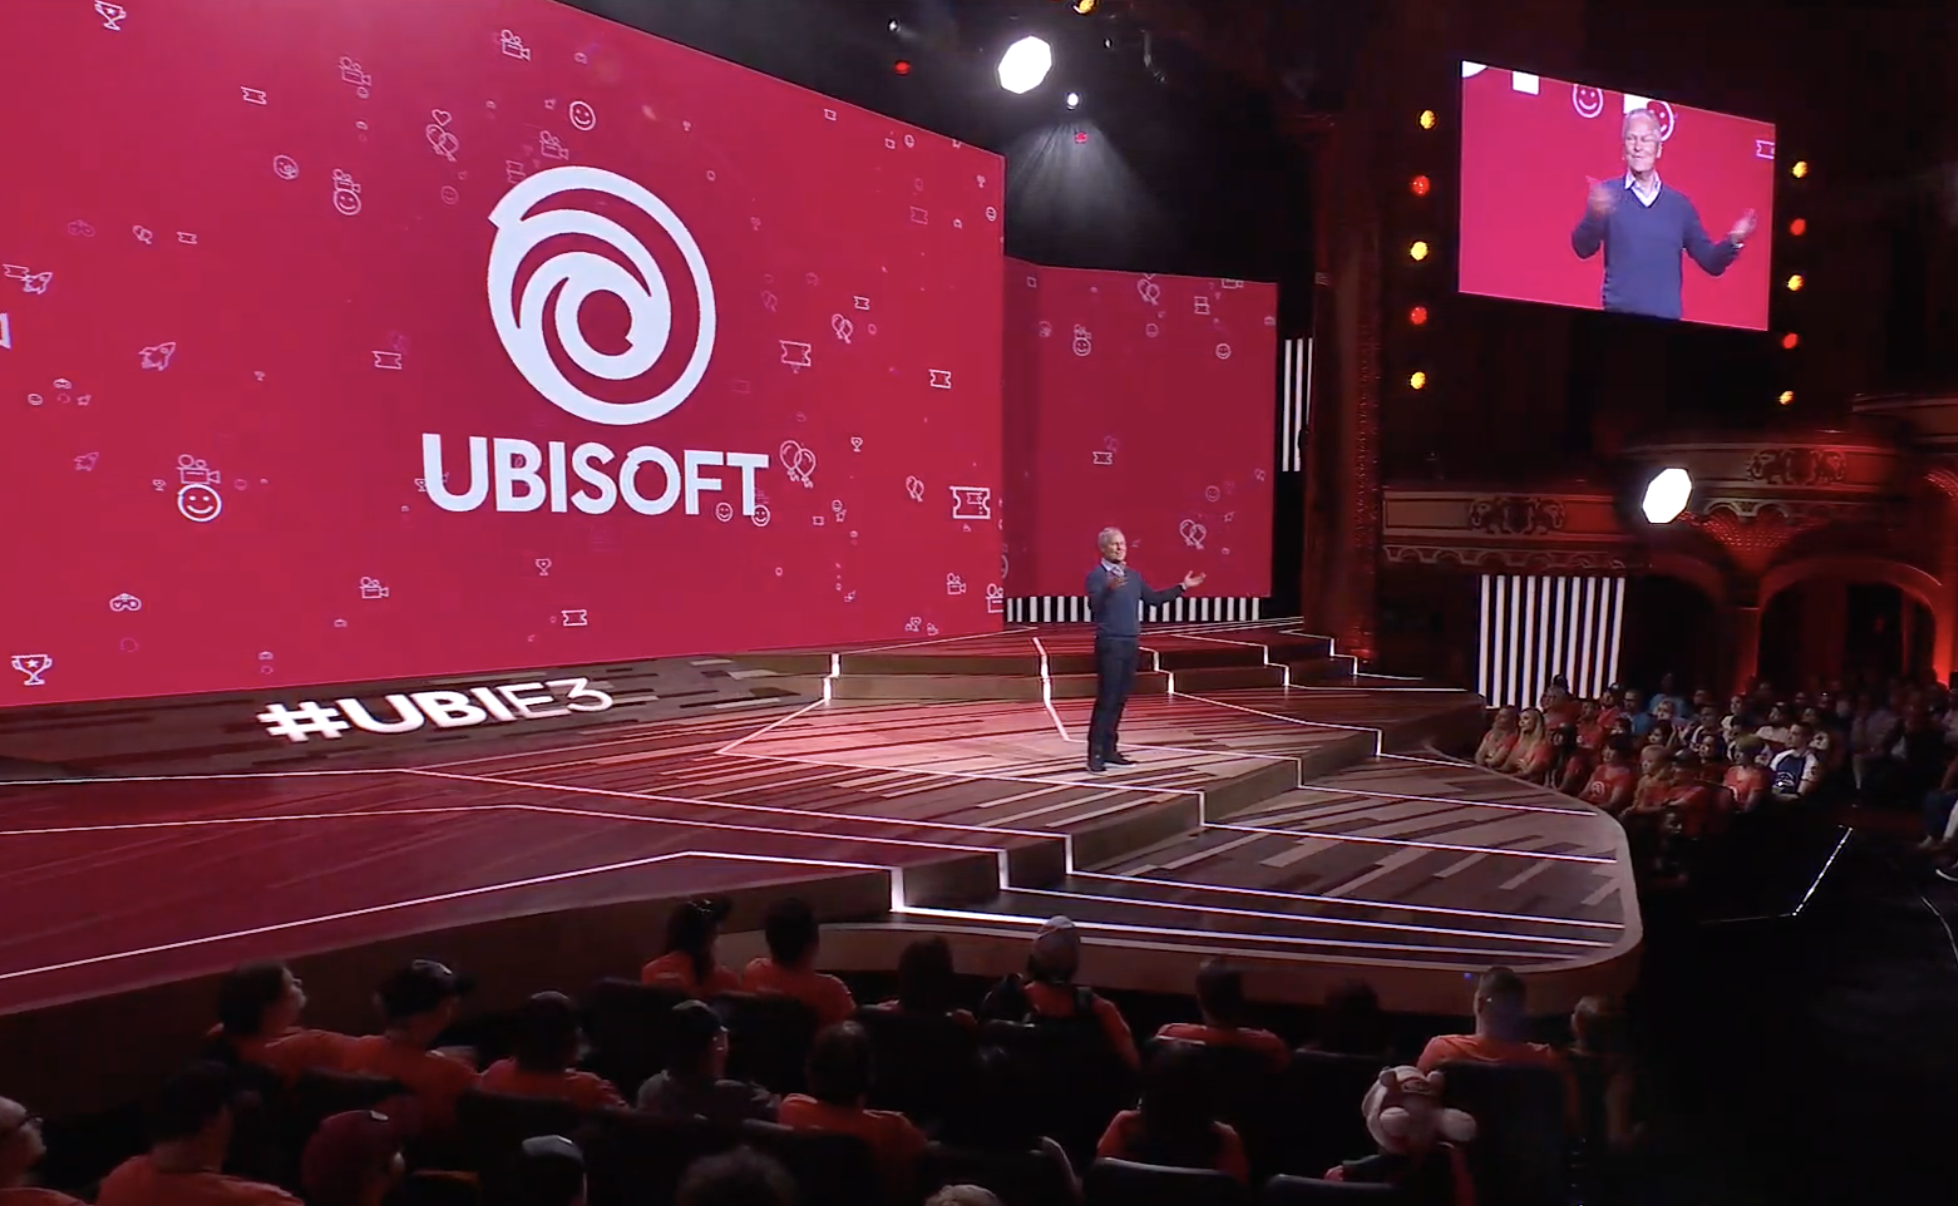 Forwarded events. Сцена Ubisoft на e3 2019. Игровая конференция e3 2019. Юбисофт форвард 2023. E3 2019 ведущая.